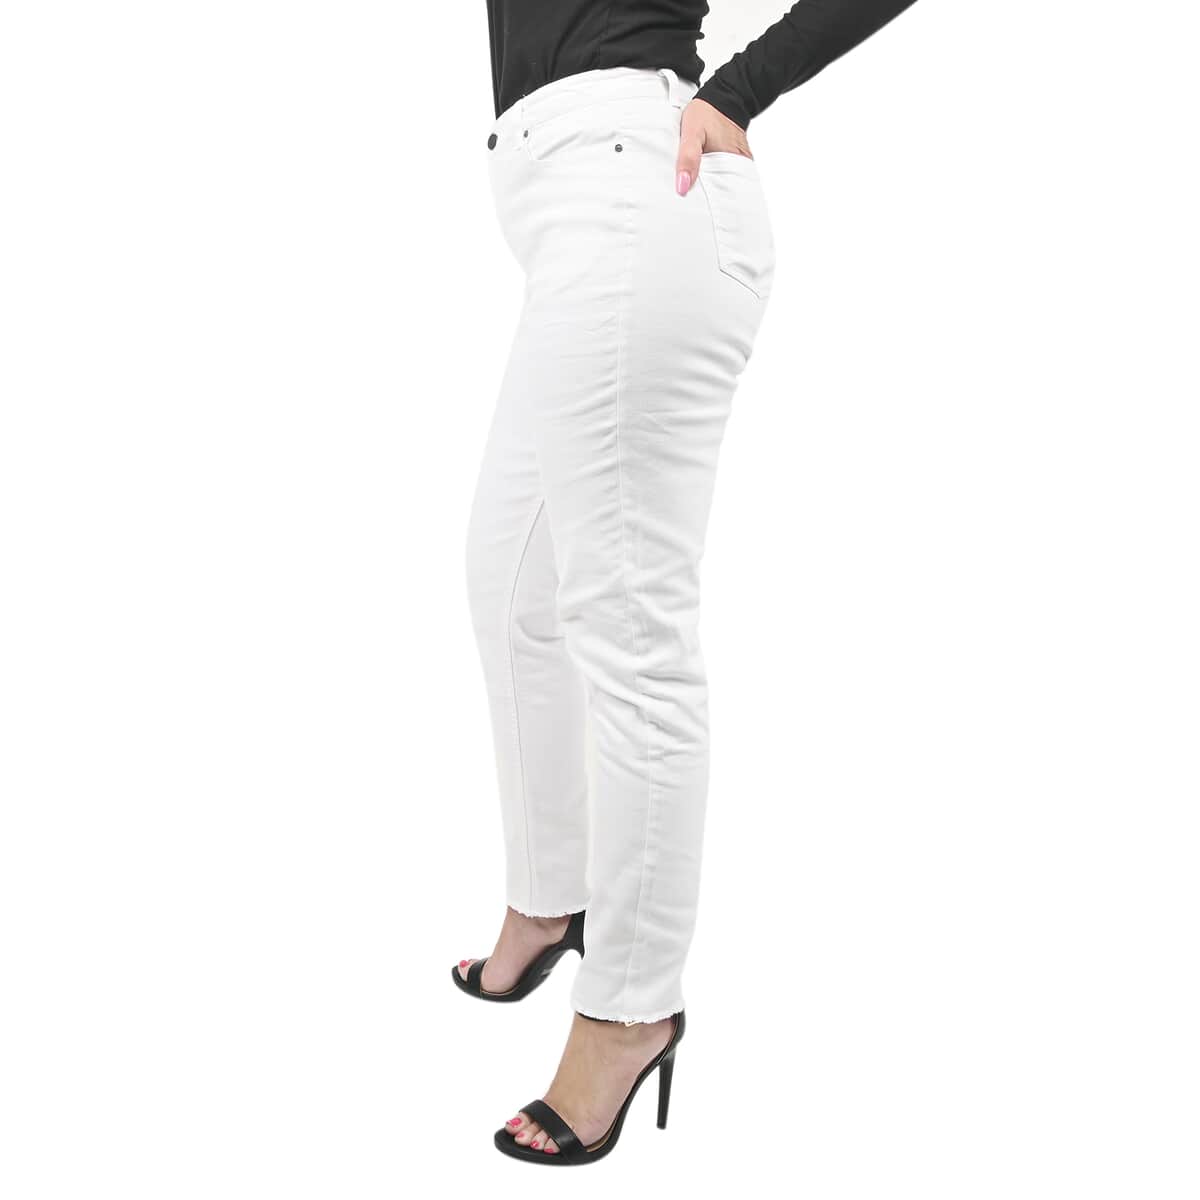 Buy Halston White Denim Skinny High Waist Jean - Size 12 at ShopLC.